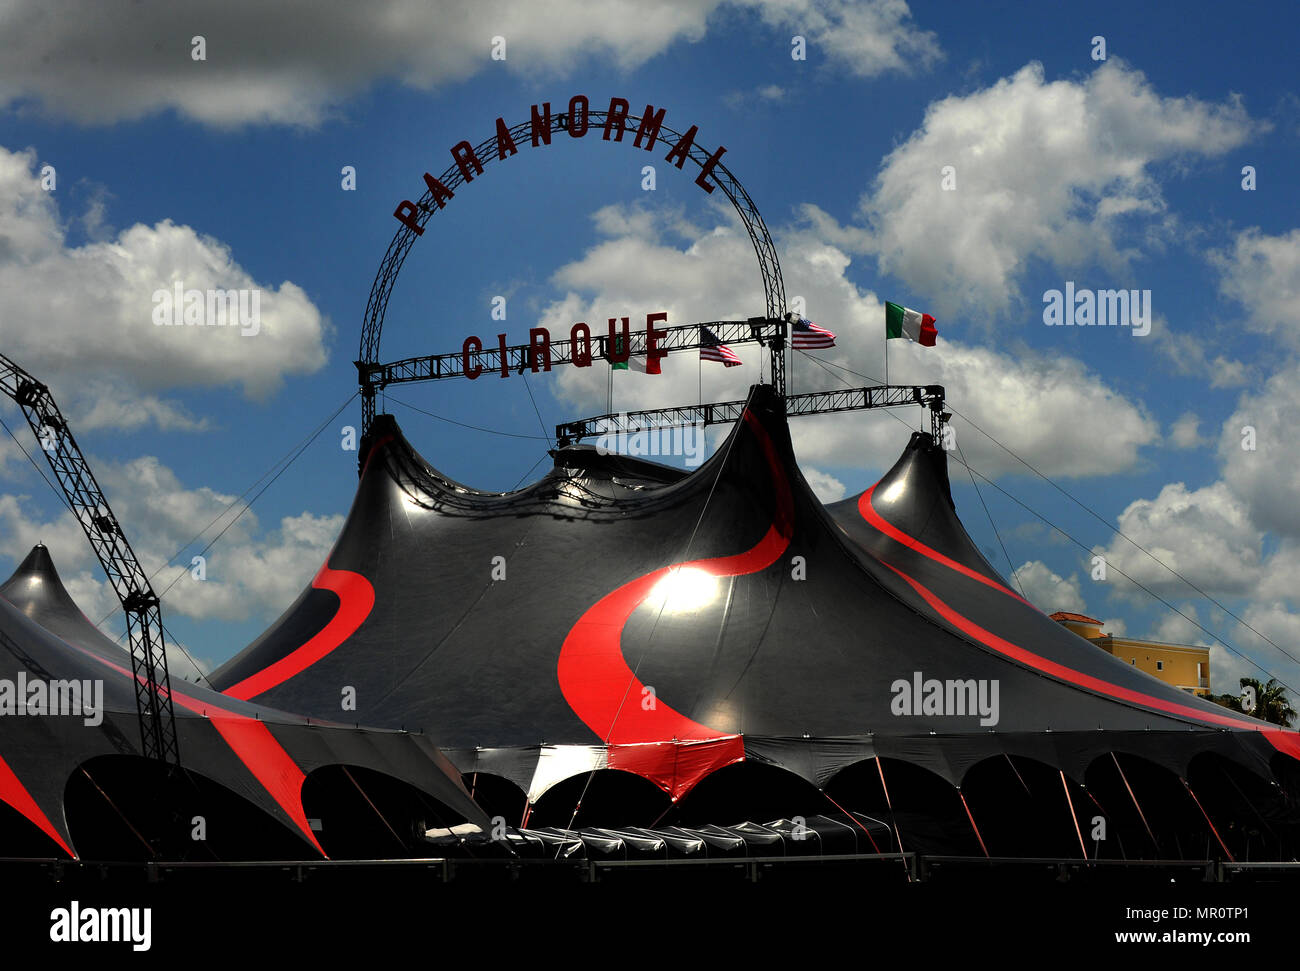 haunted circus tent